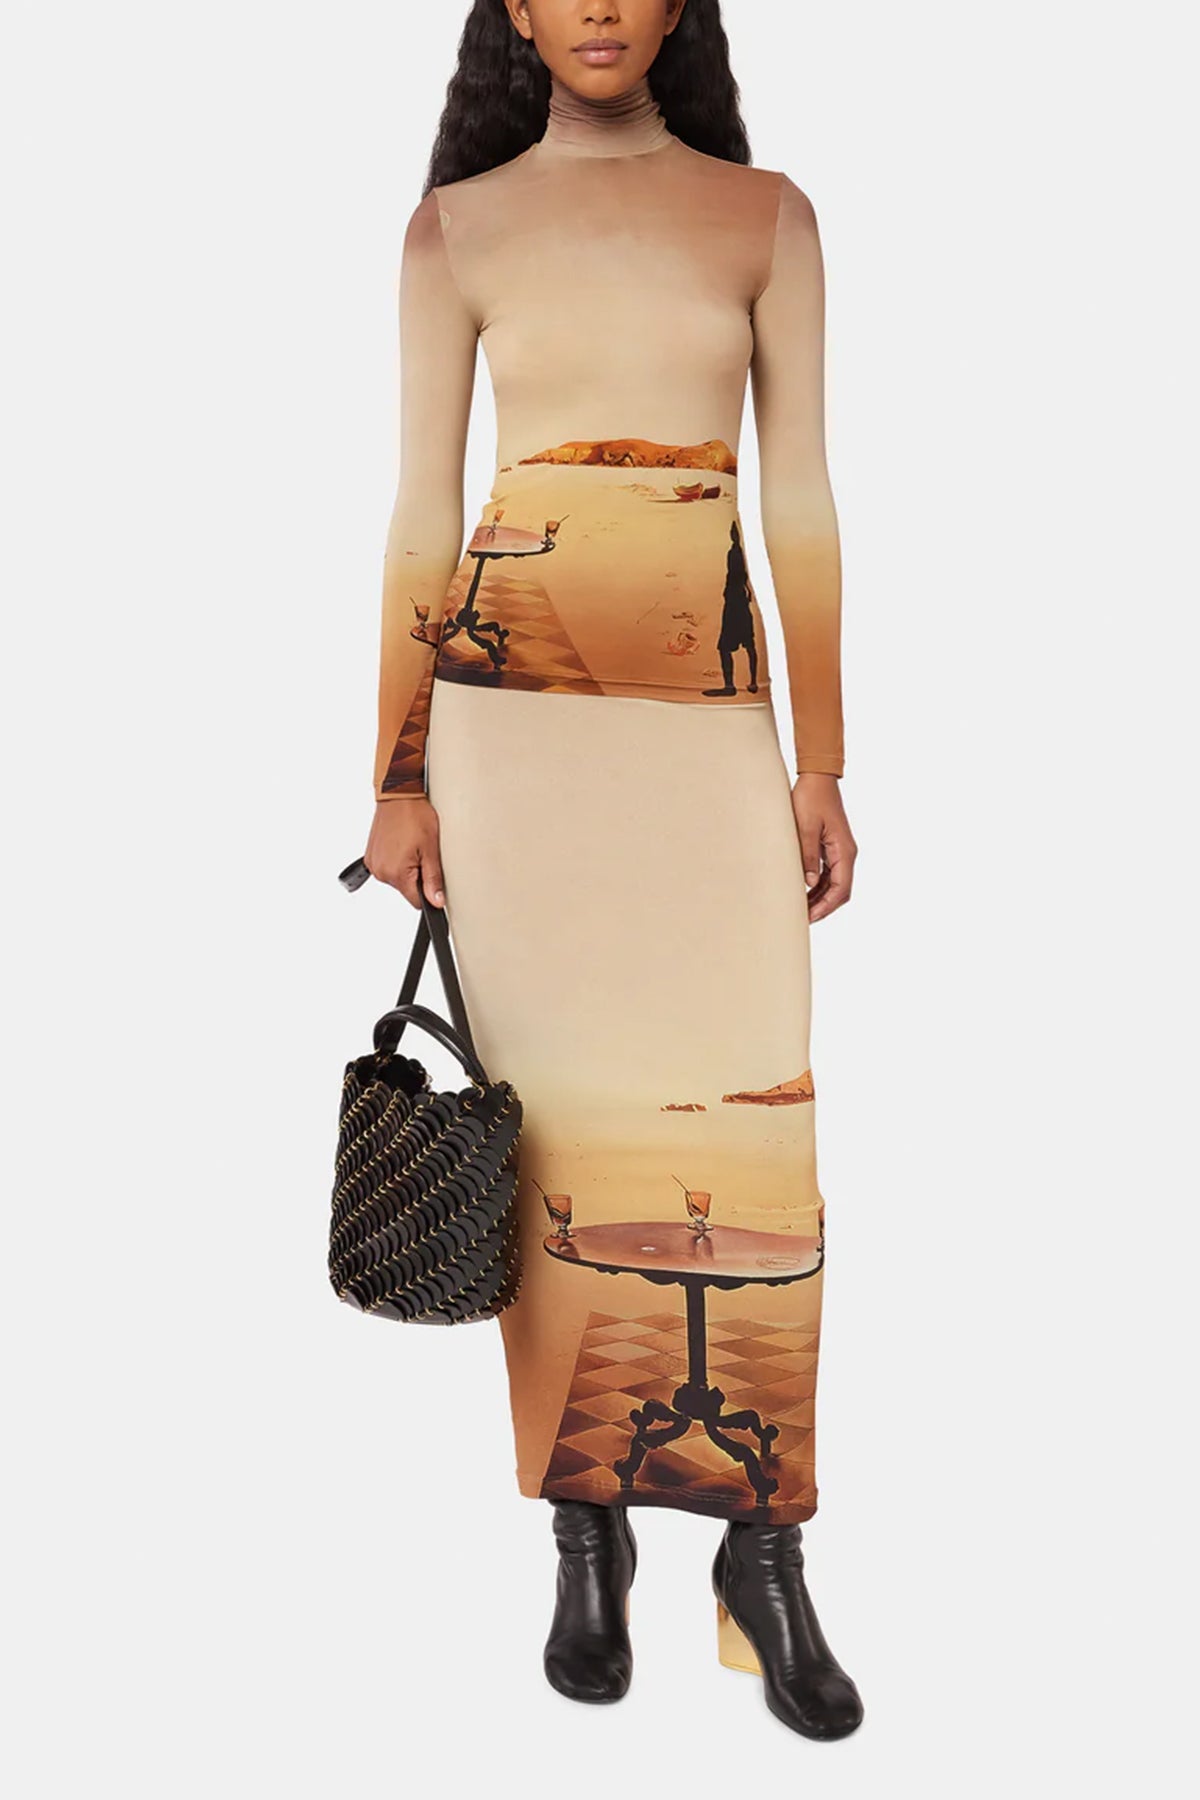 Dali's Sun-Table Long Skirt in La Table Solaire - shop-olivia.com